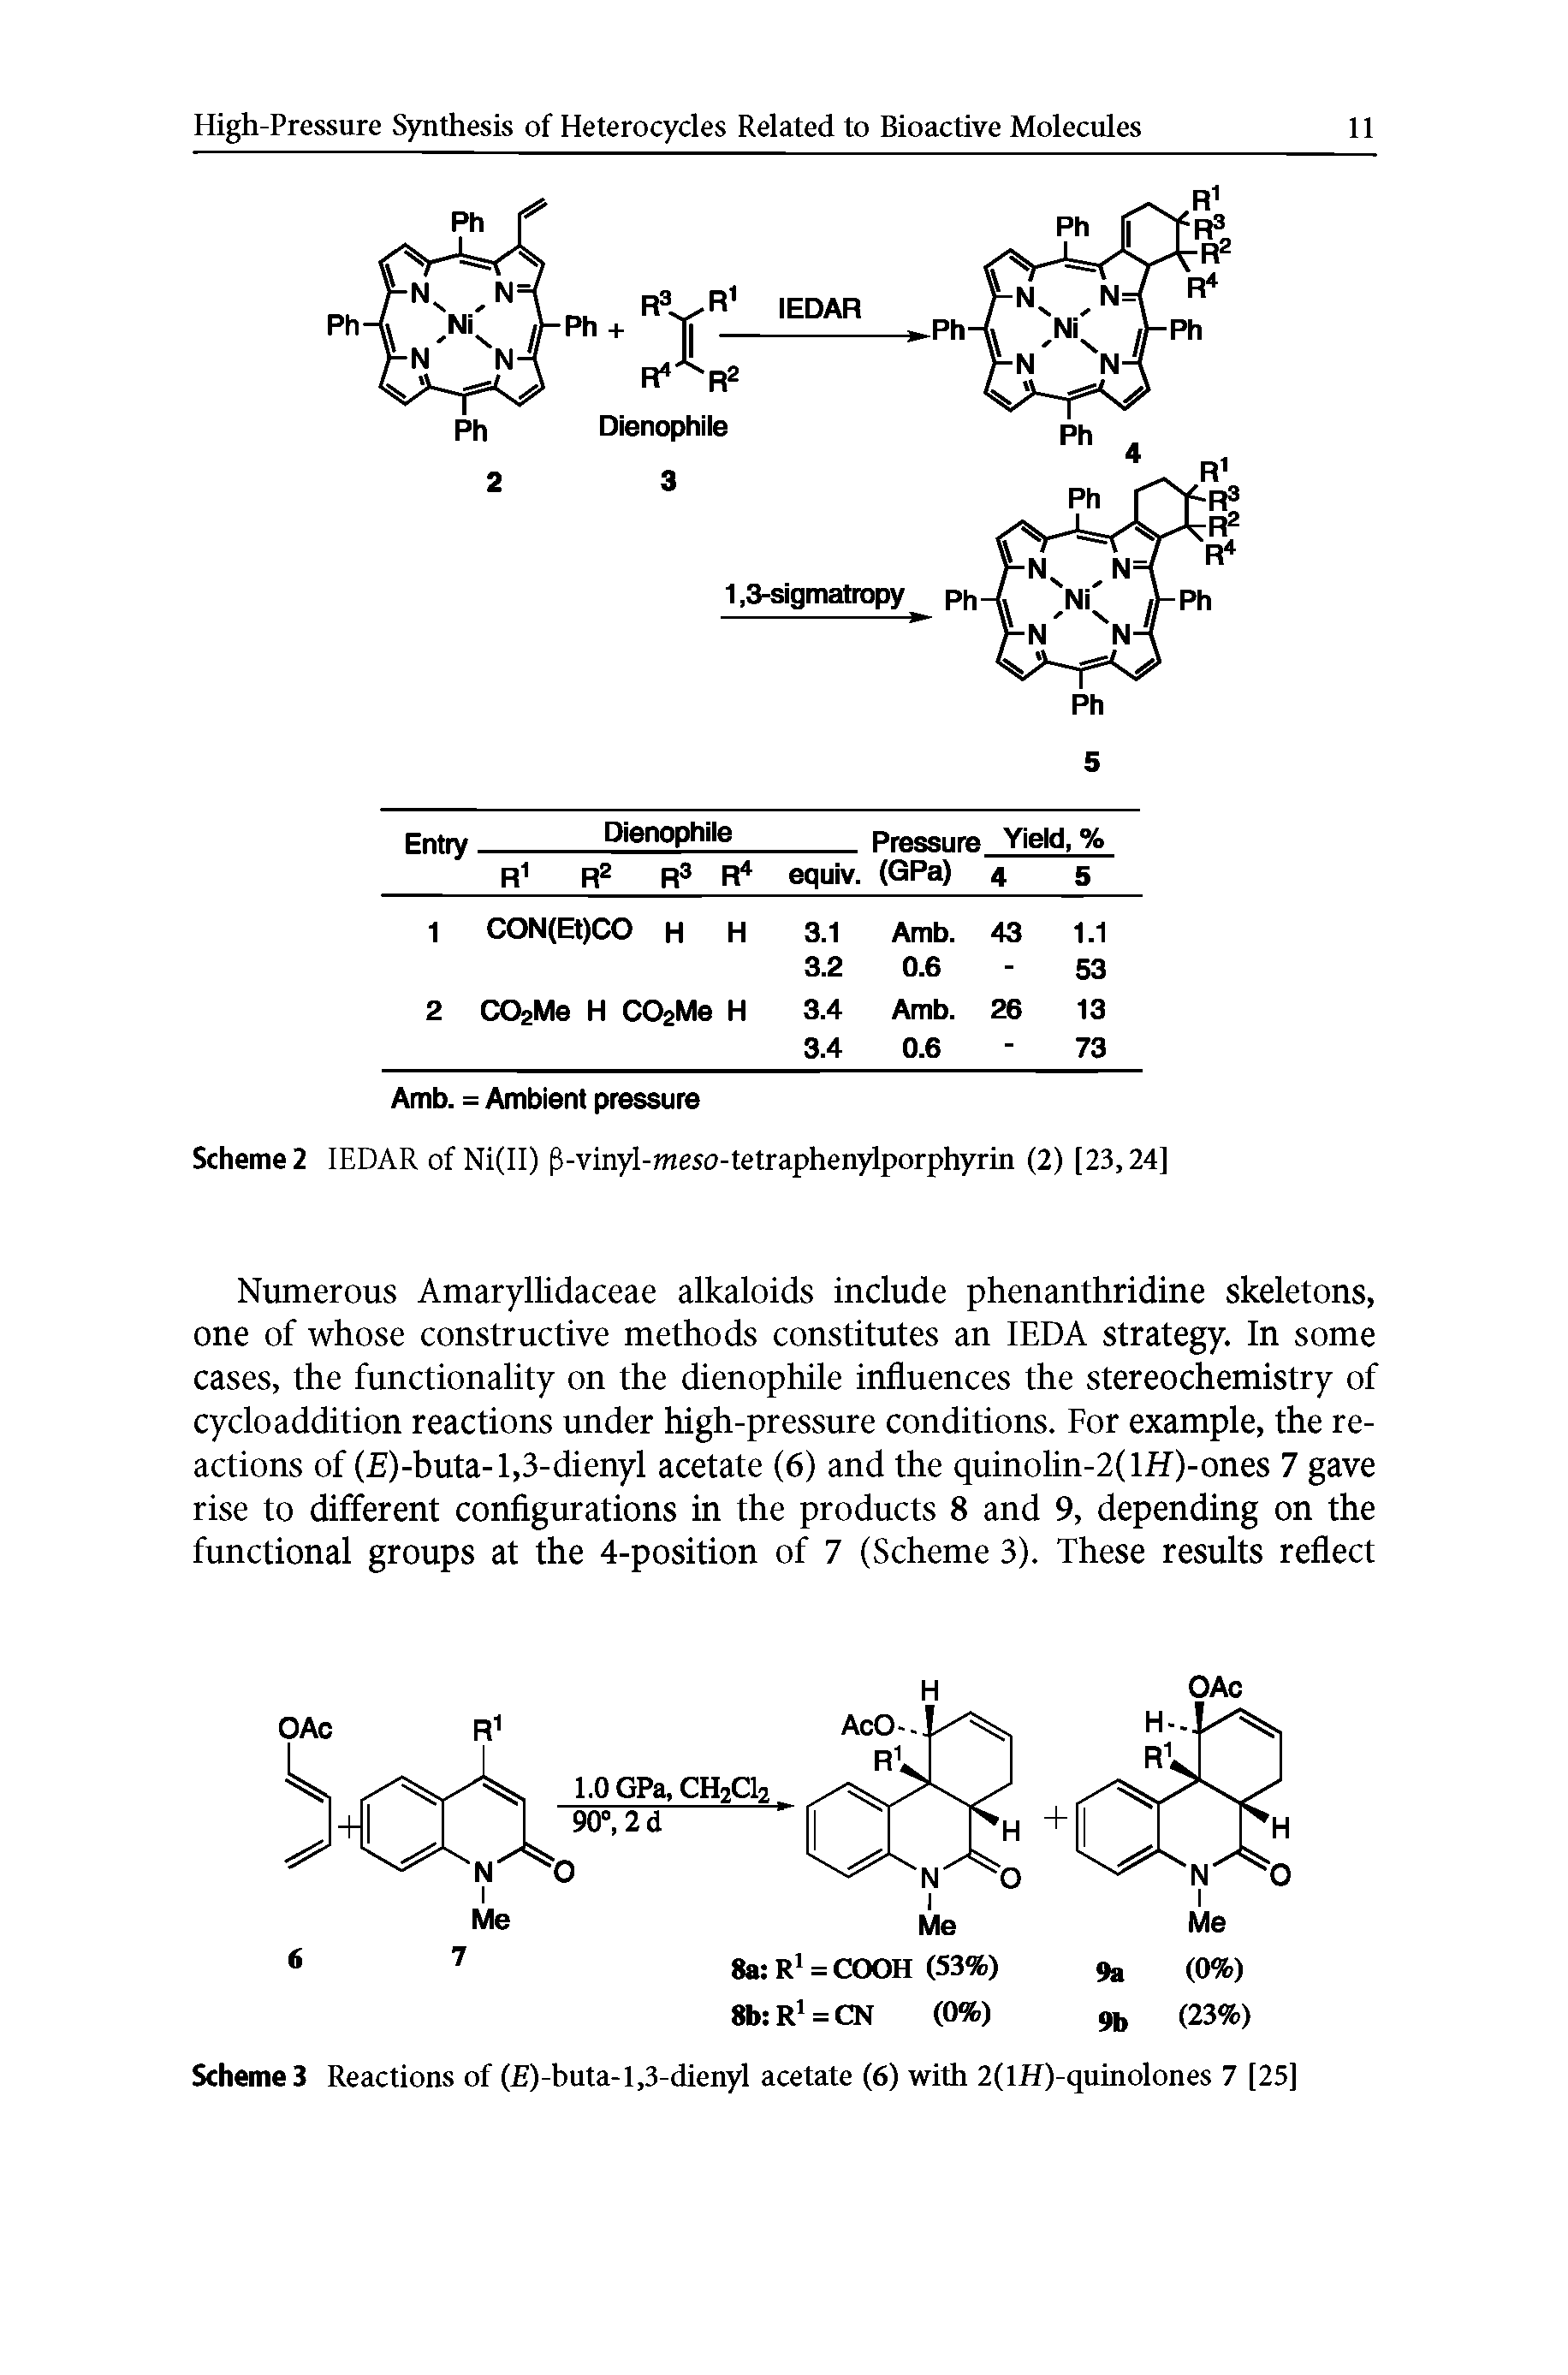 Scheme 3 Reactions of (E)-buta-l,3-dienyl acetate (6) with 2(lH)-quinolones 7 [25]...